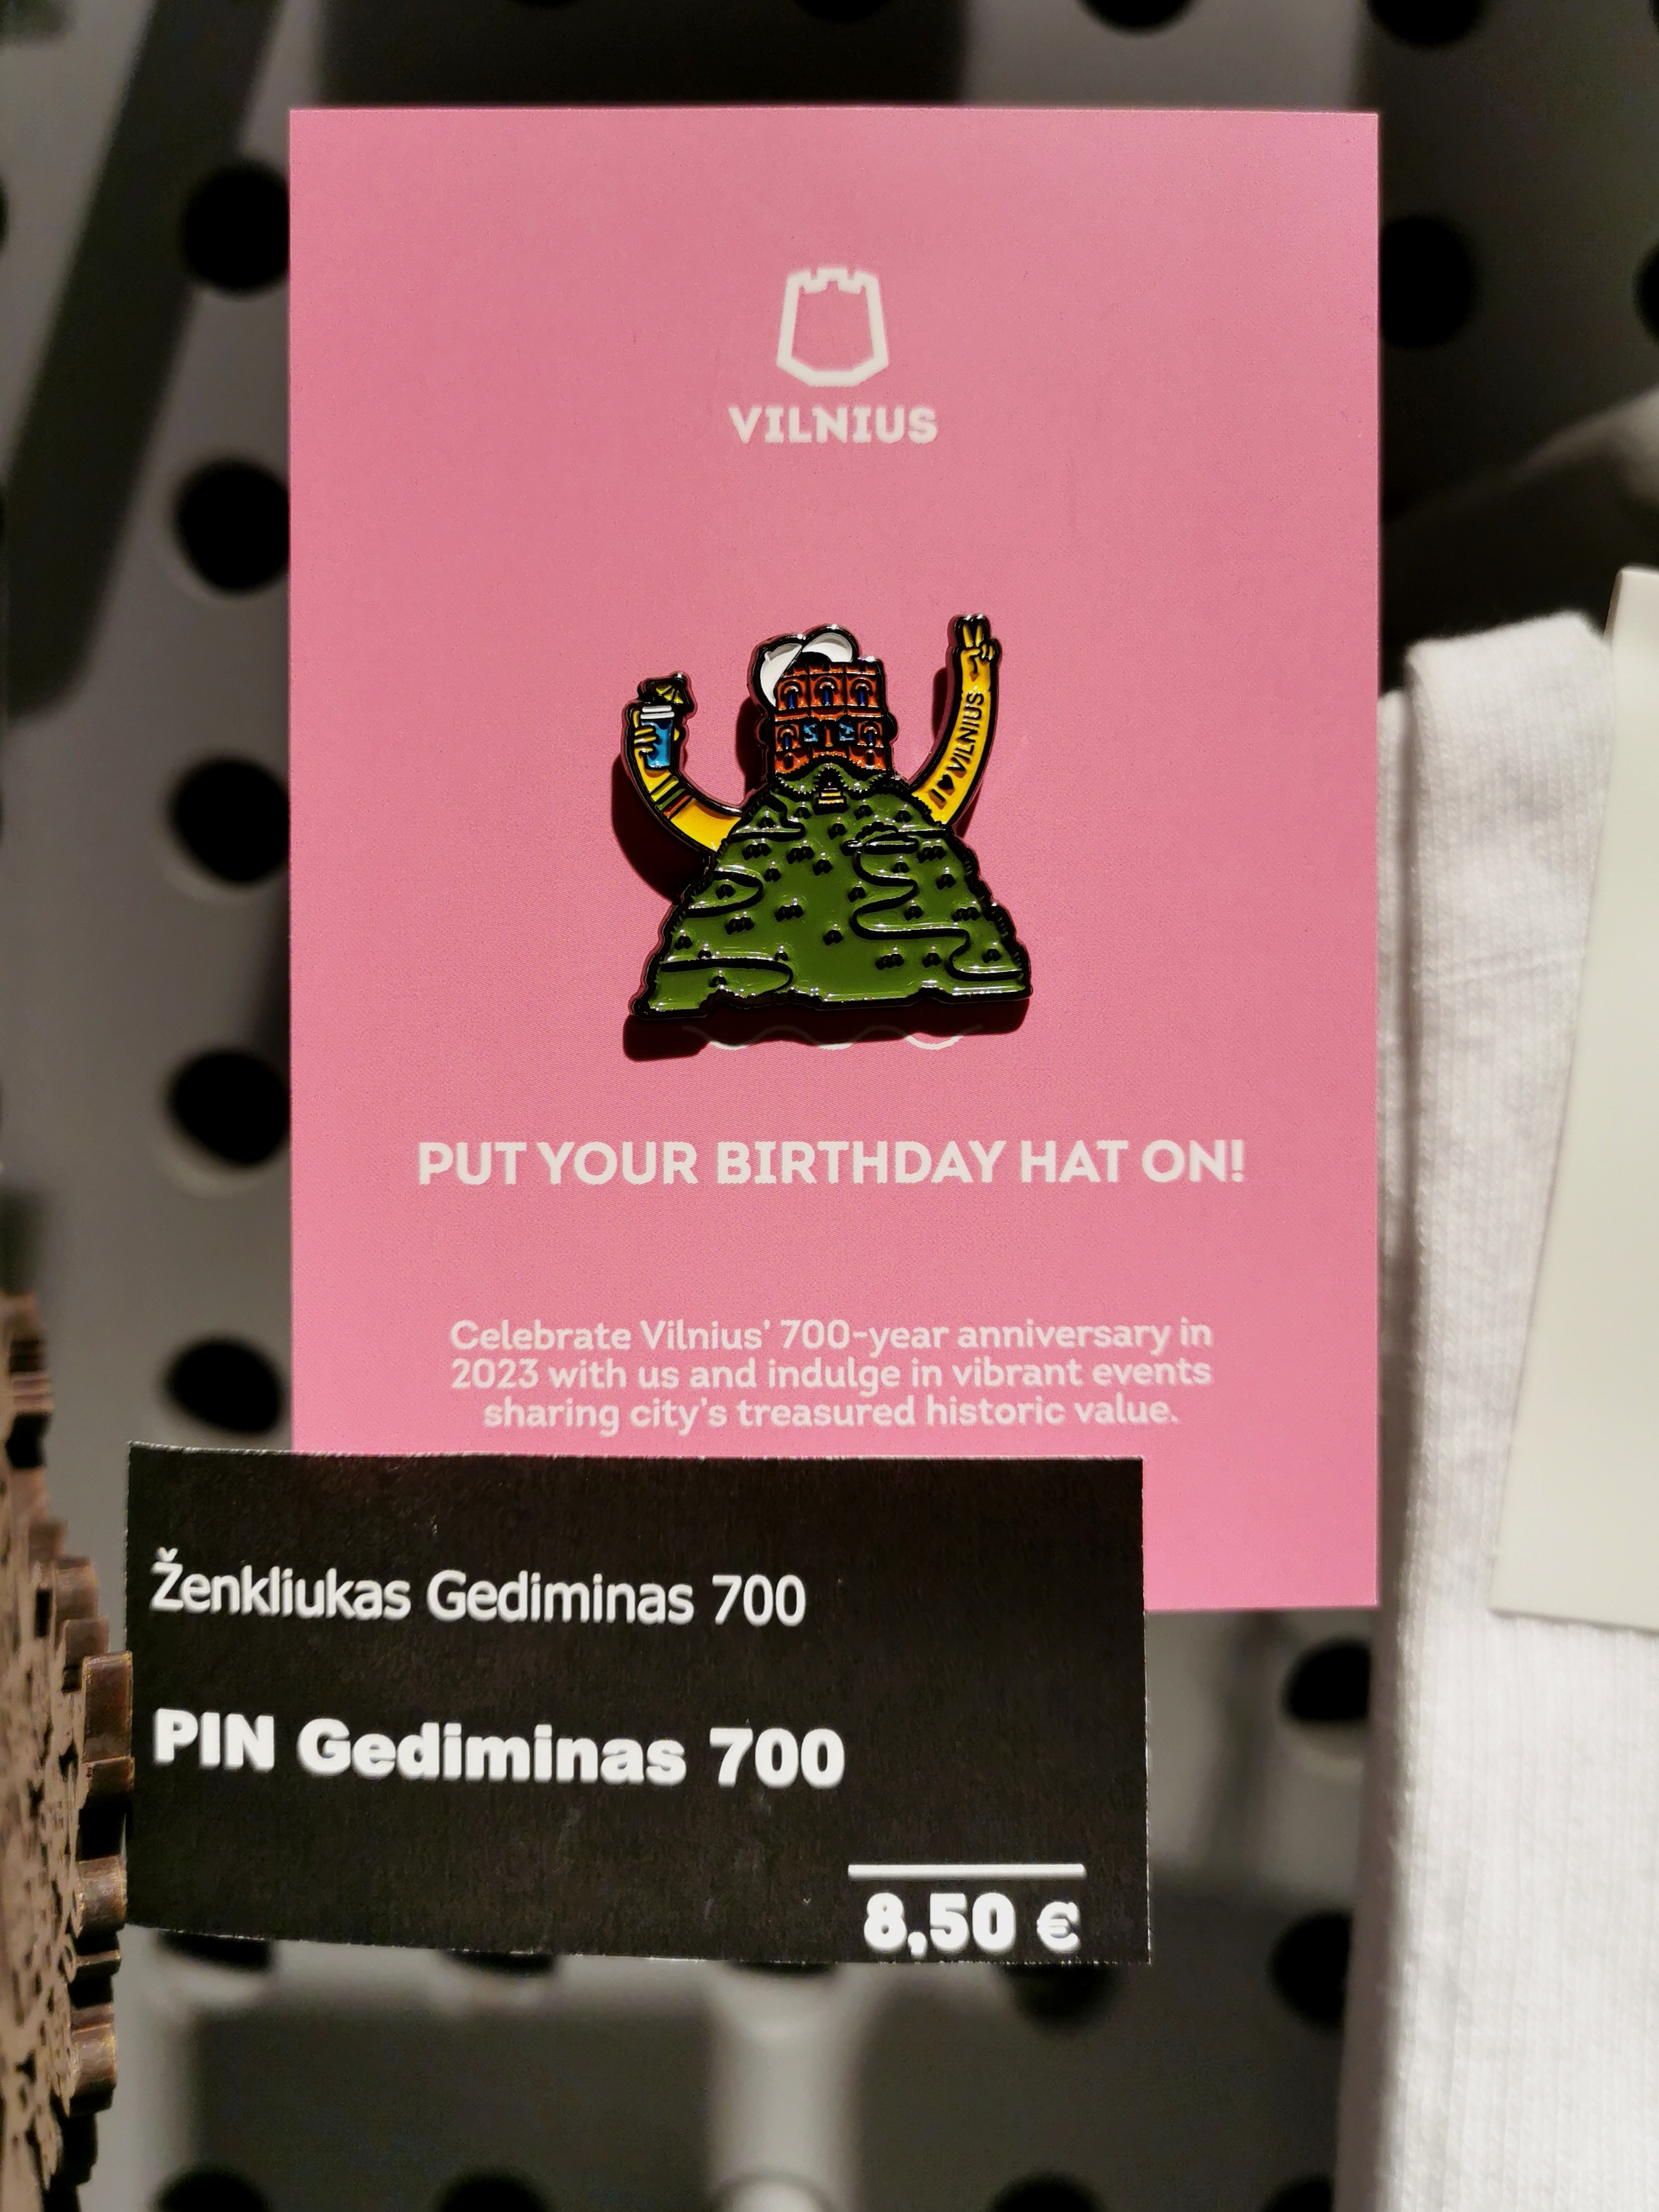 Pins for Vilnius birthday by Go Vilnius